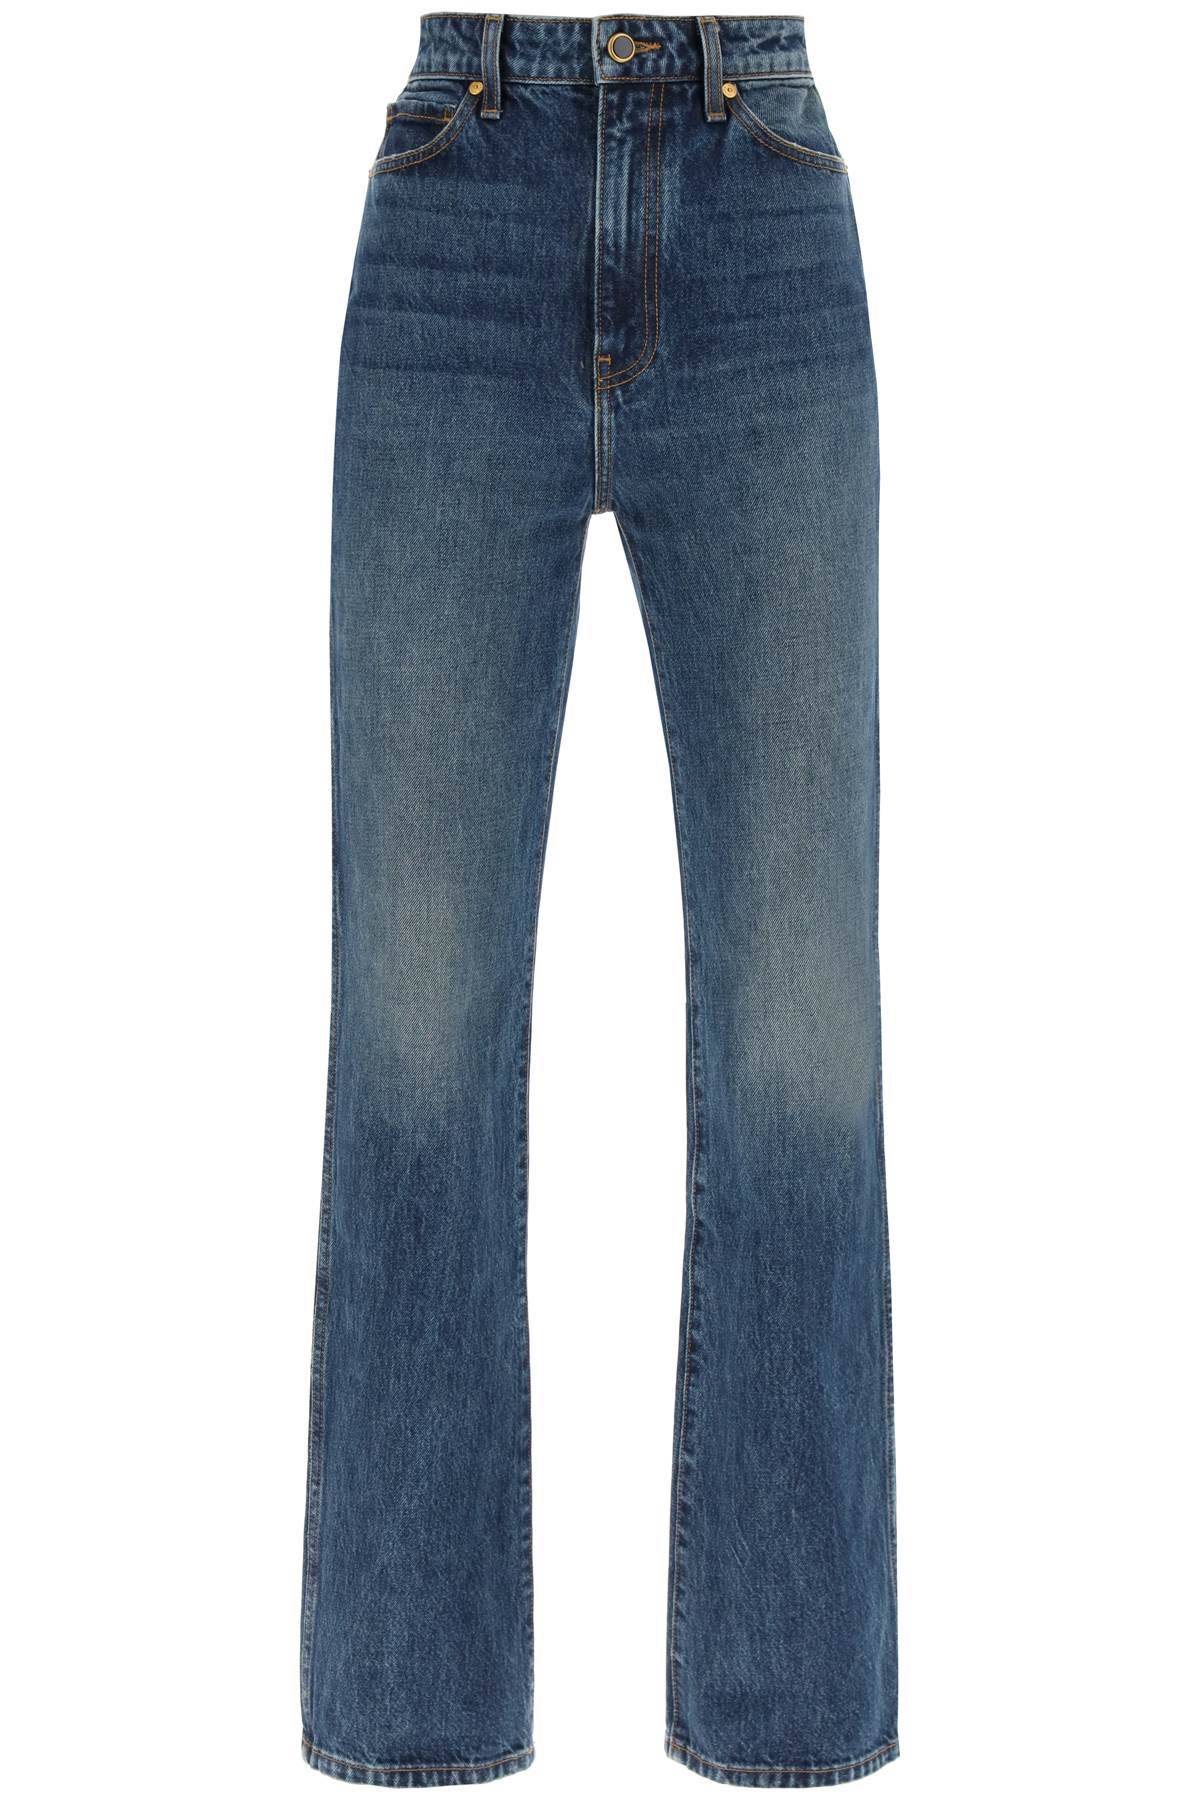 Khaite KHAITE slim fit danielle jeans